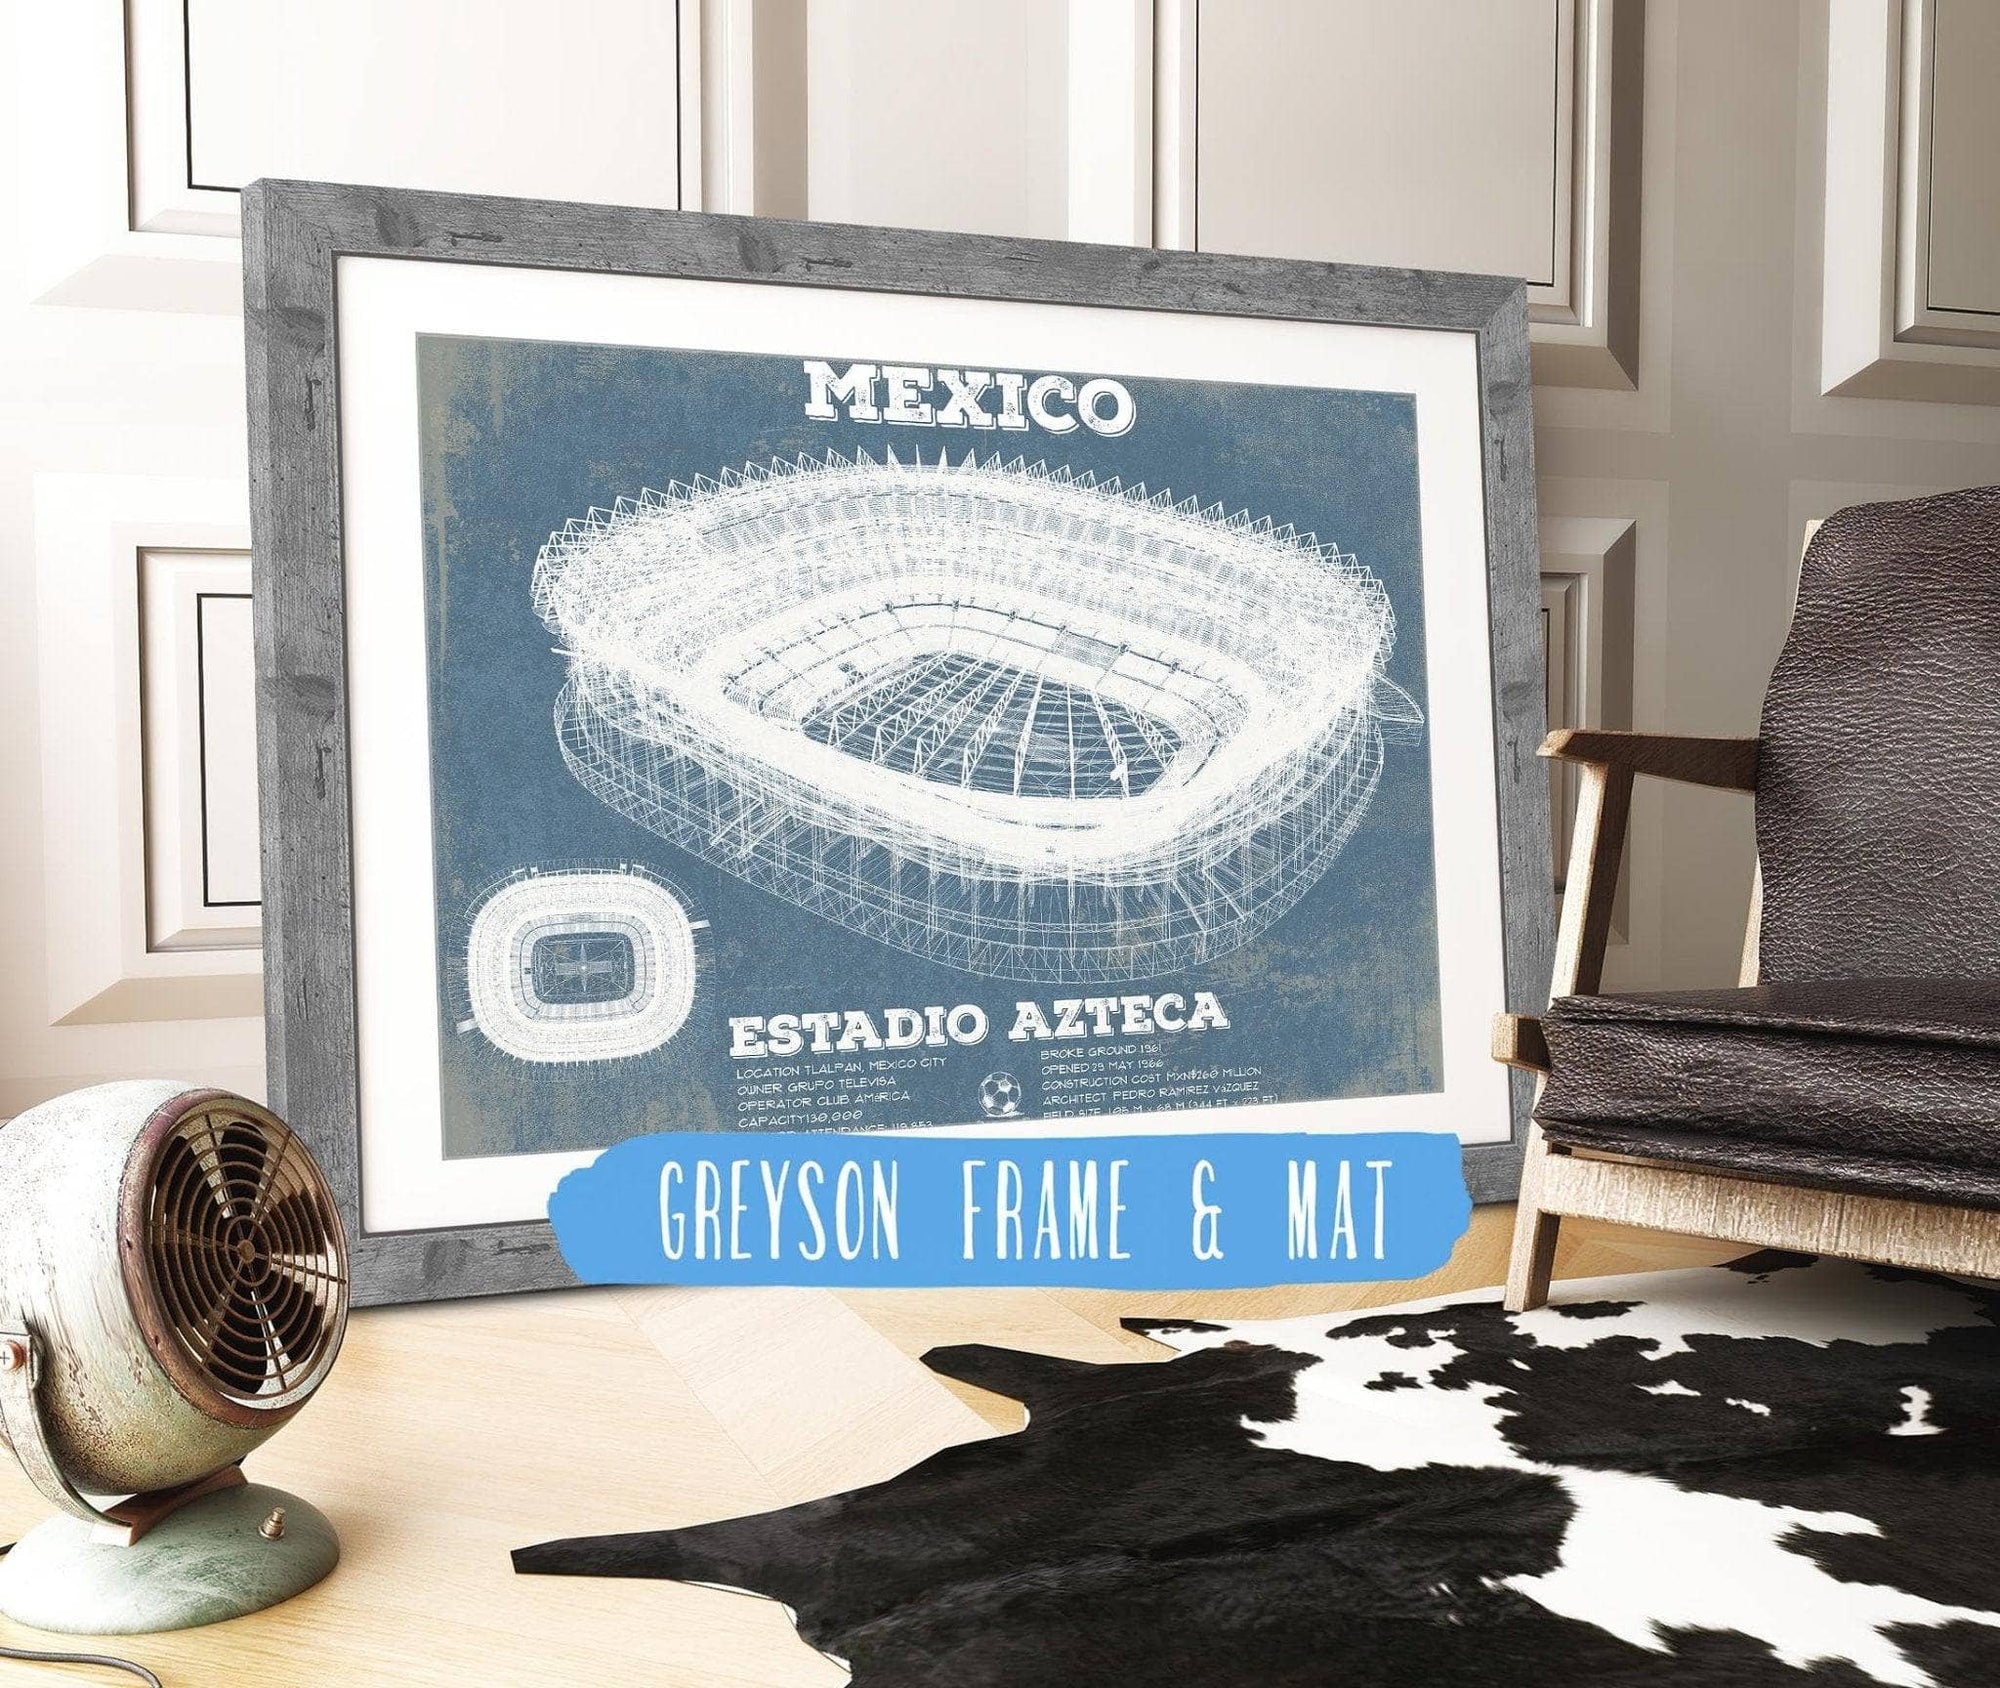 Cutler West Soccer Collection 14" x 11" / Greyson Frame & Mat Mexico Football - Vintage Estadio Azteca Stadium Soccer Print 755380905_74195